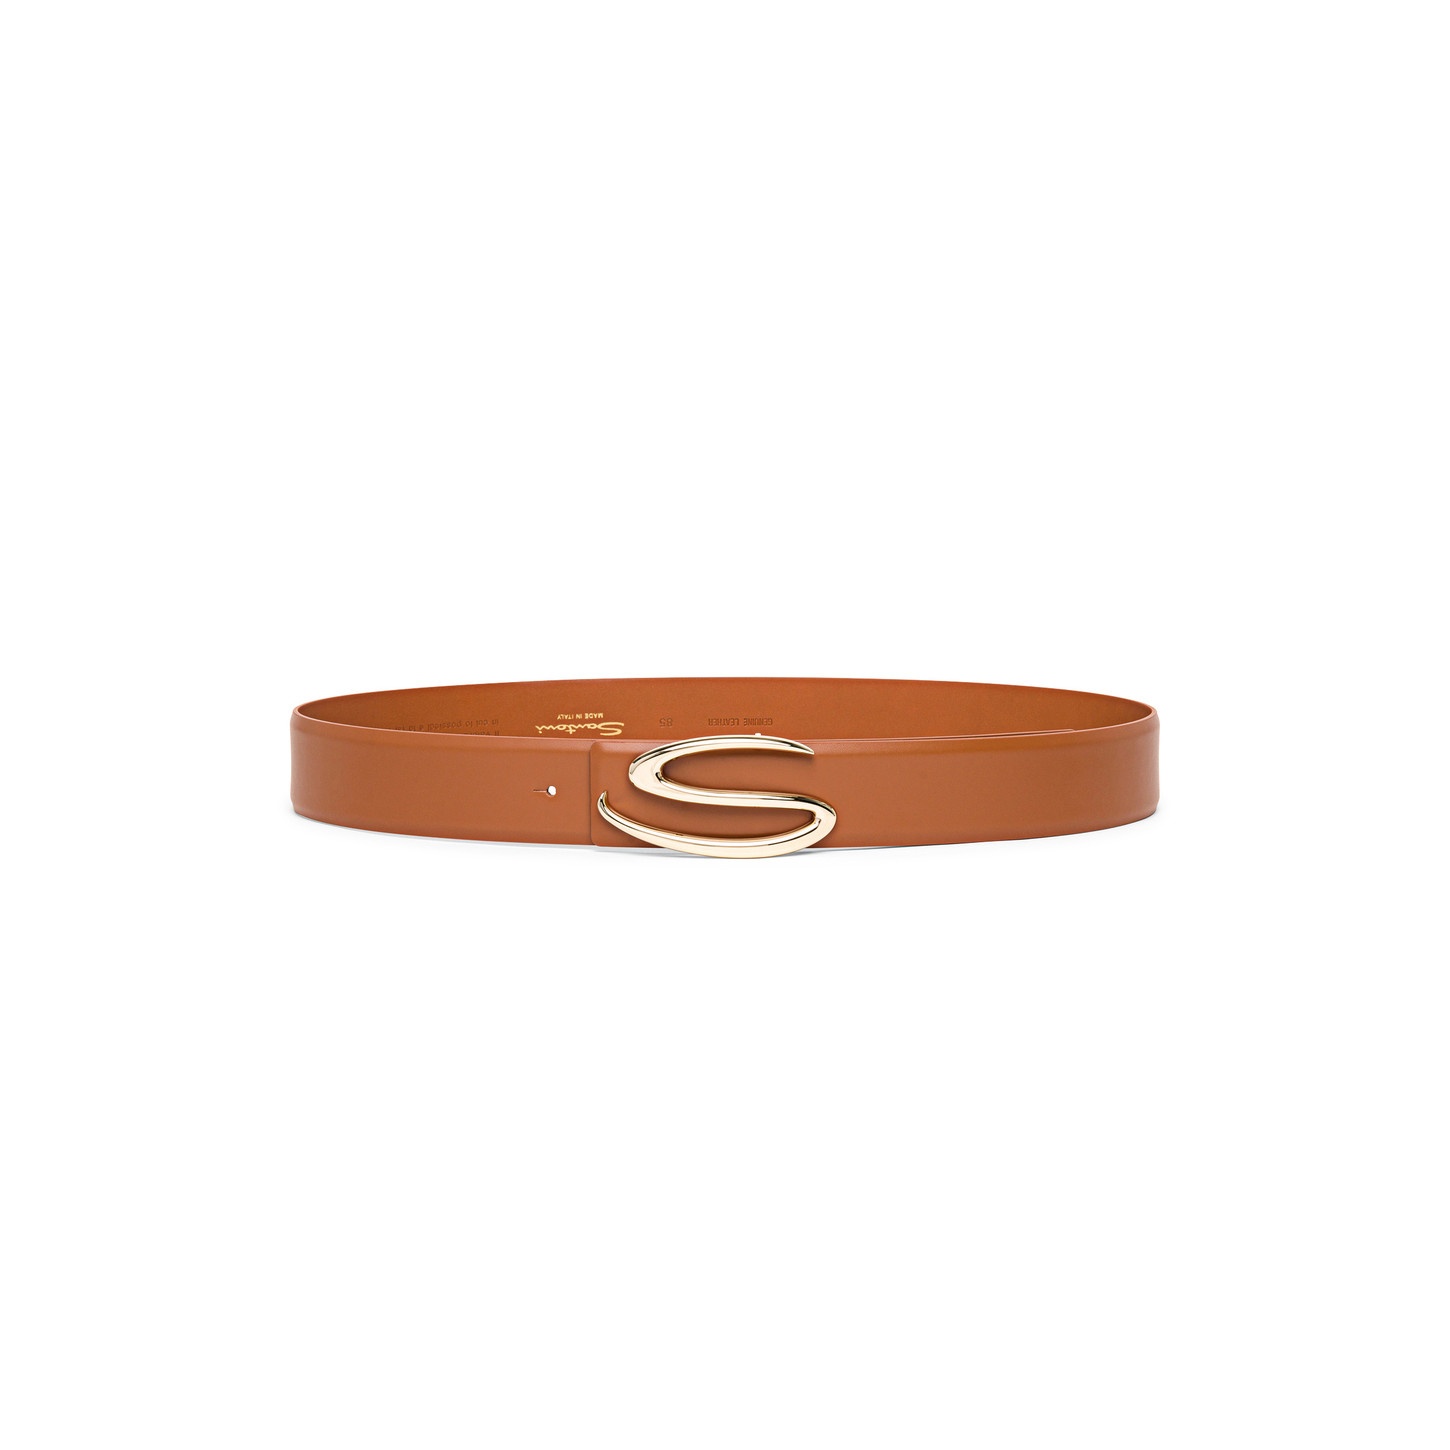 Brown leather belt strap - 2